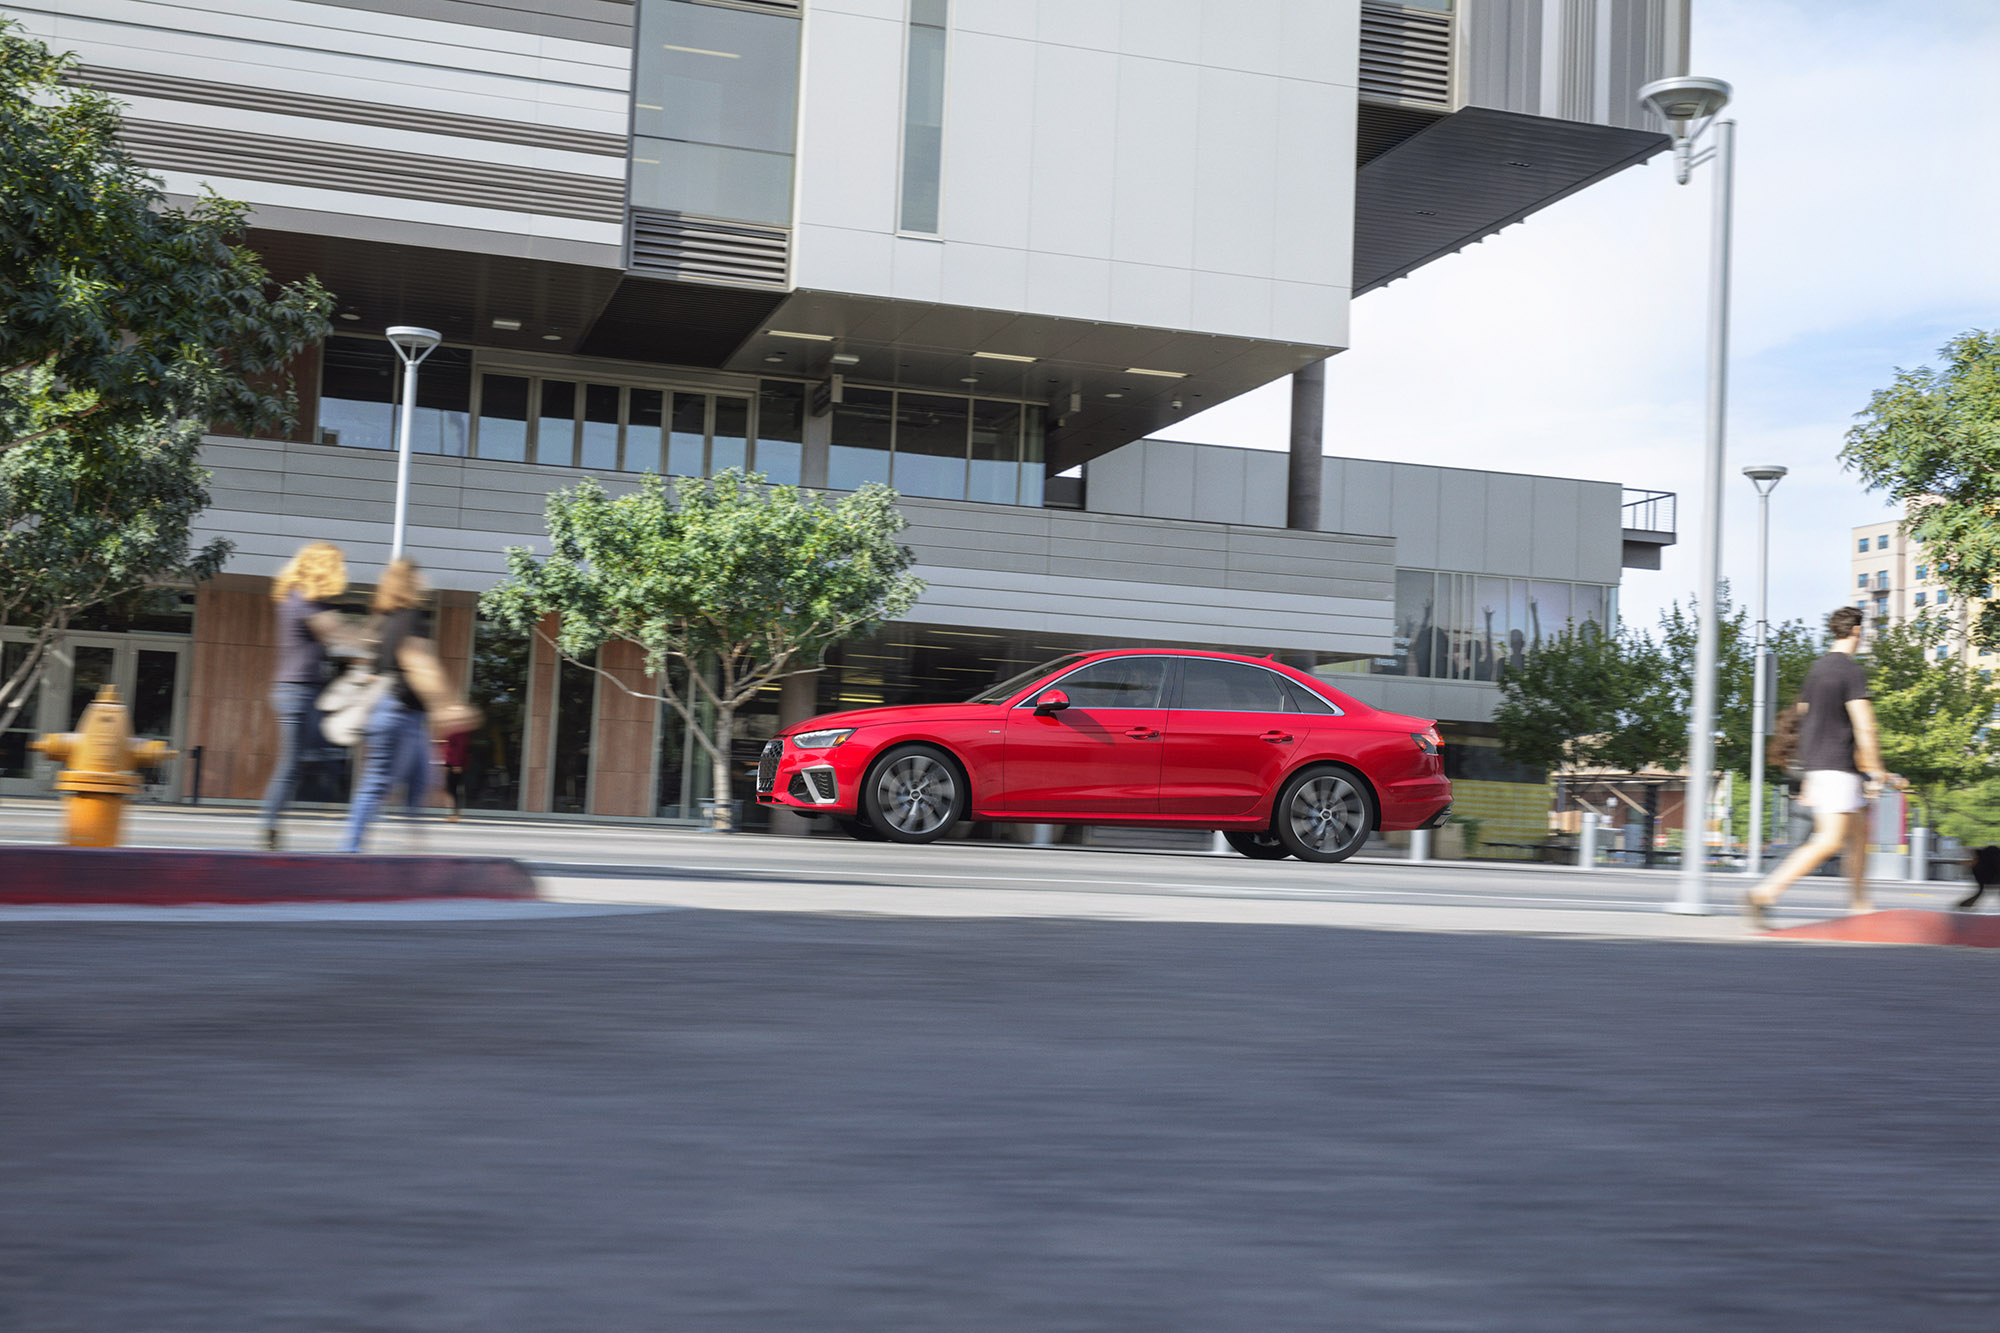 A red Audi A4 driving through a city.